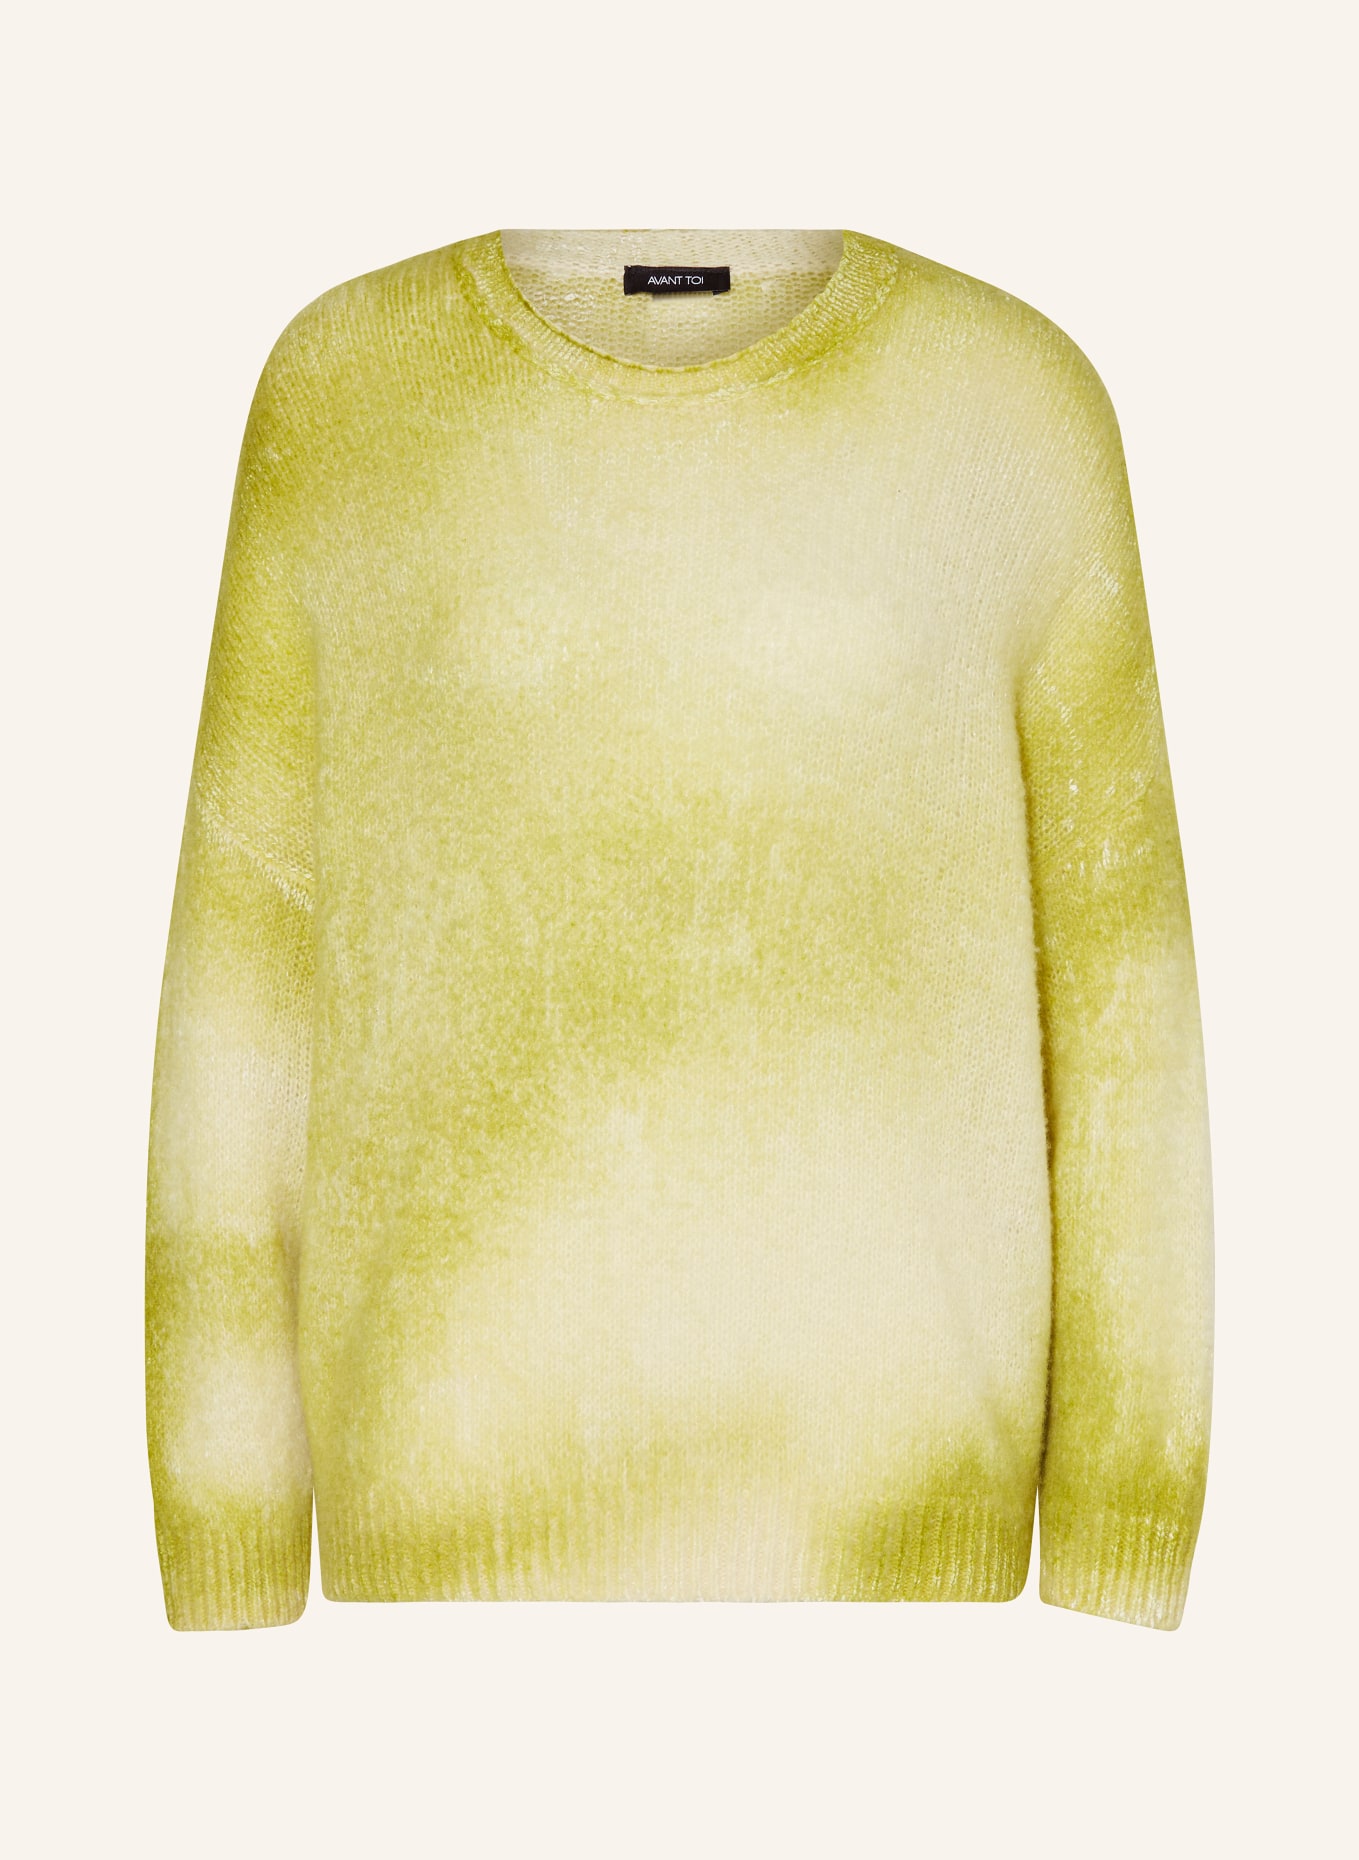 AVANT TOI Cashmere-Pullover, Farbe: 19 lime lime (Bild 1)